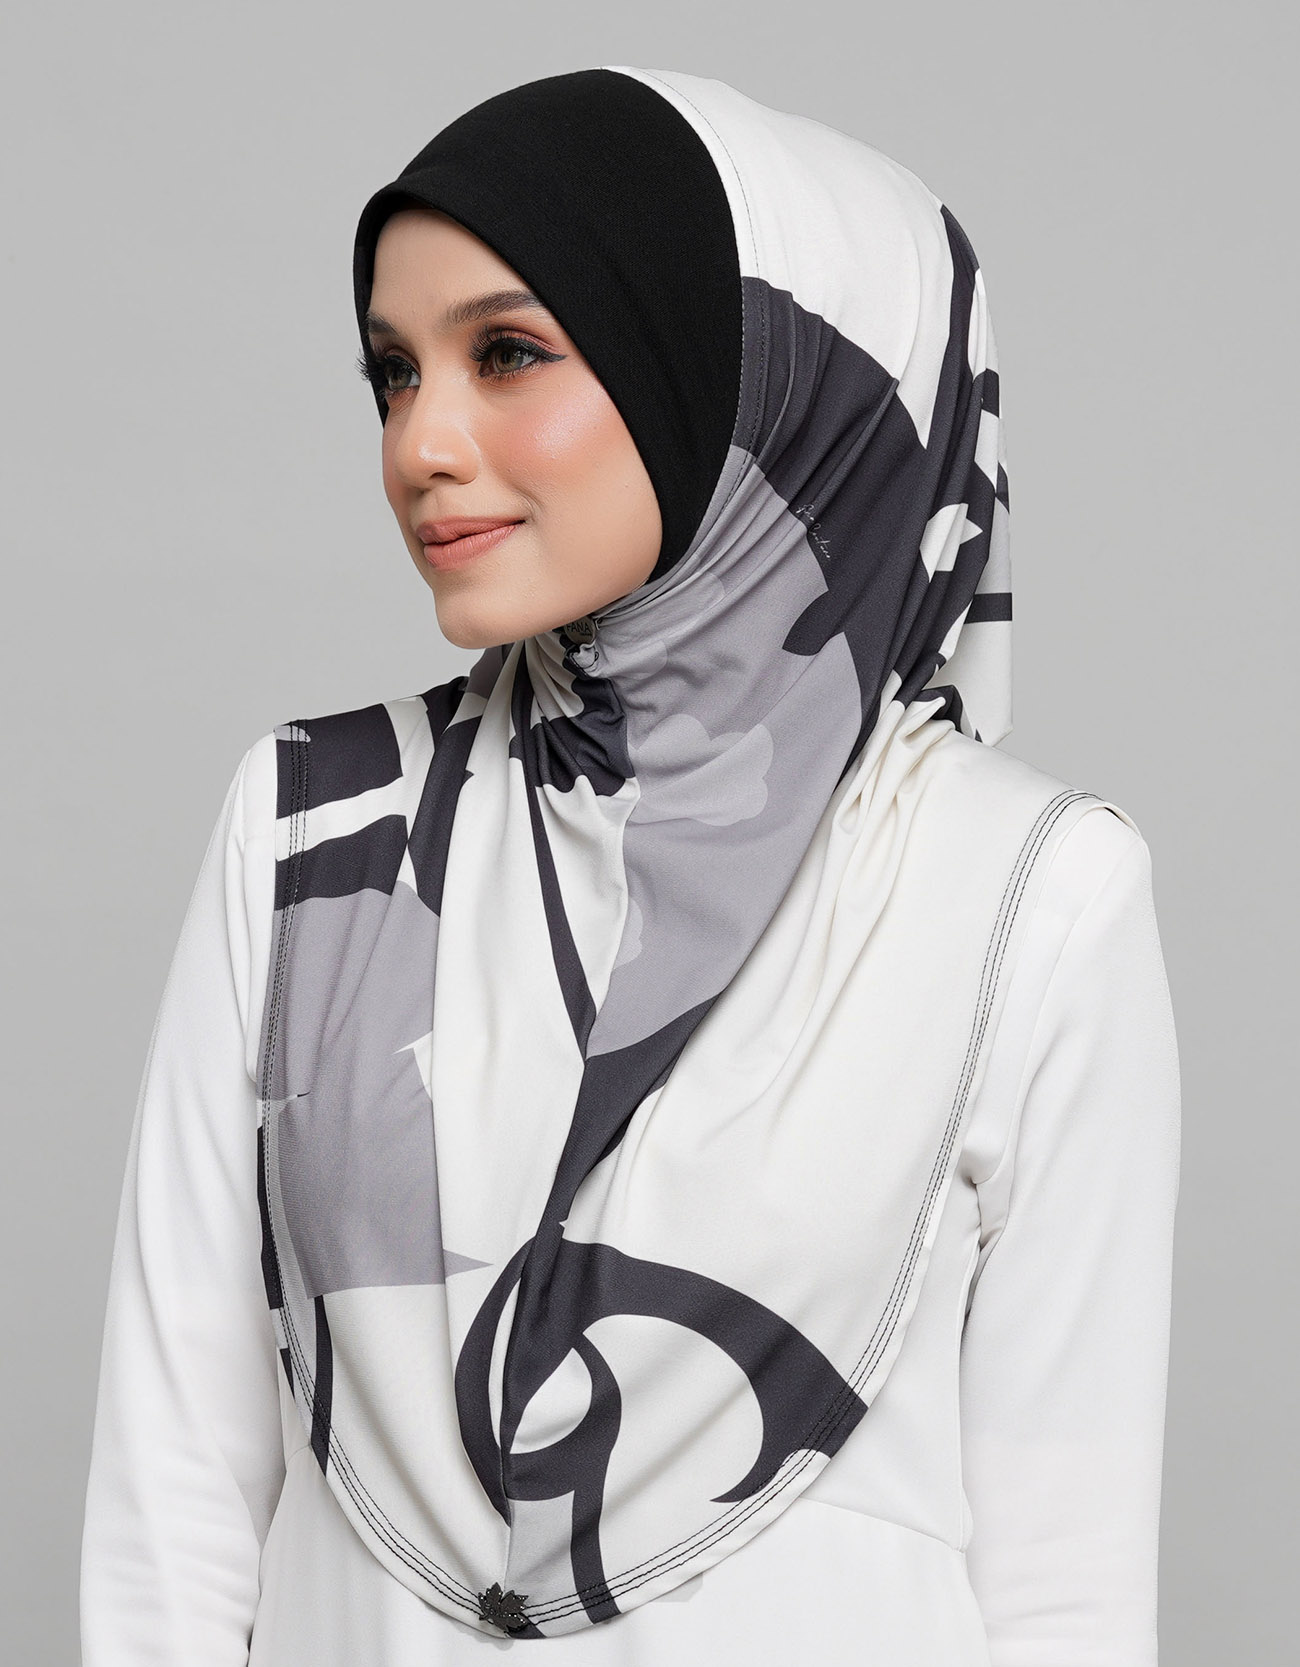 Express Hijab Damia Signature 14 - Black Edition